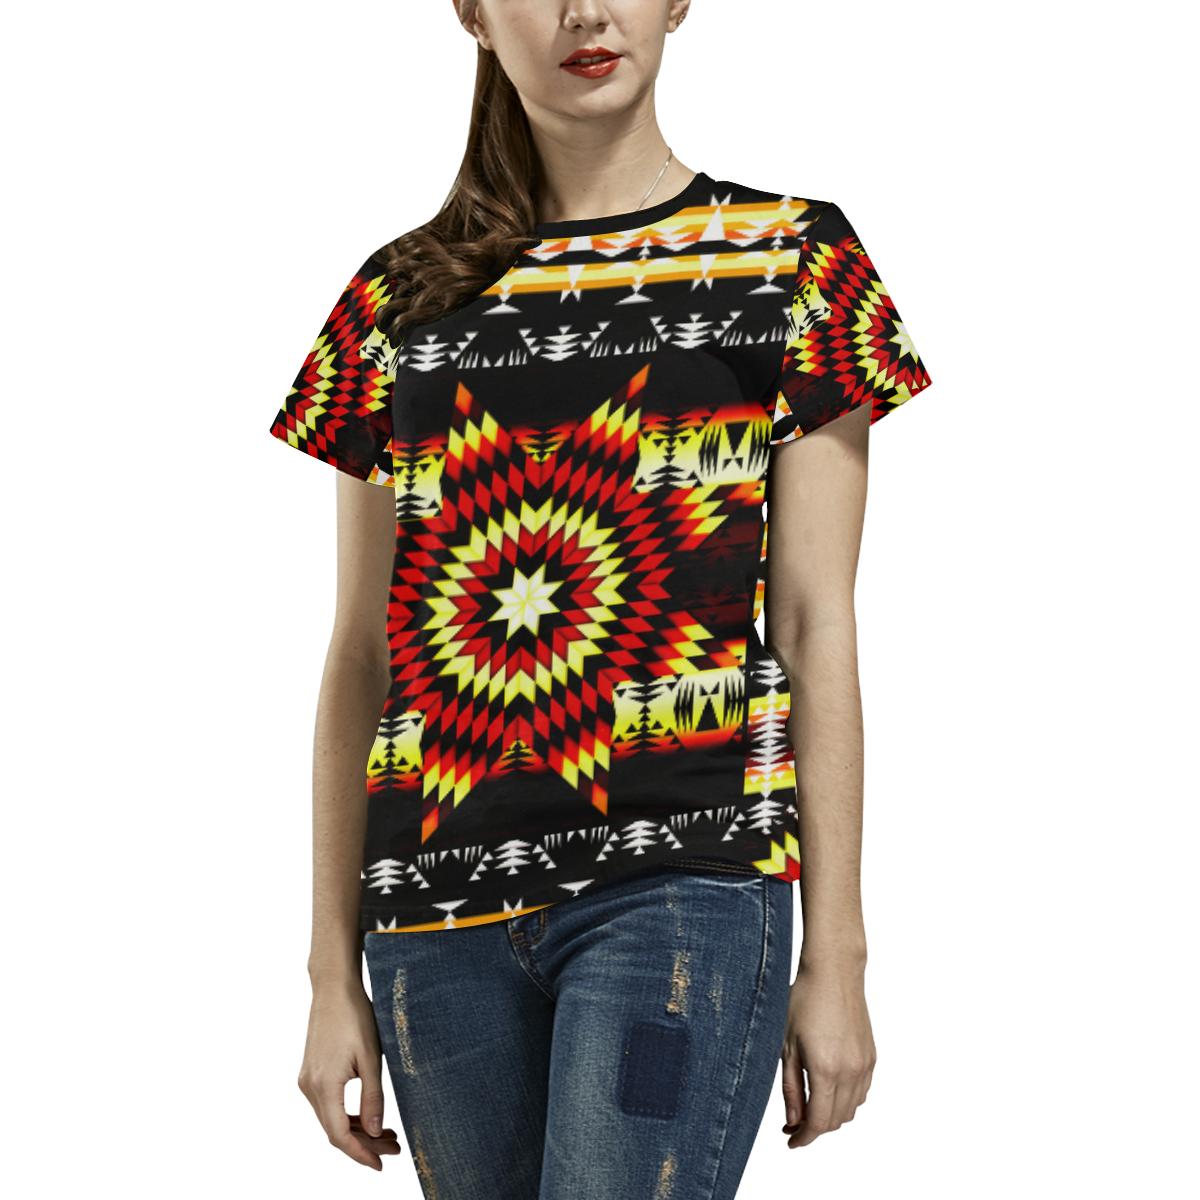 Fire Colors All Over Print T-shirt for Women/Large Size (USA Size) (Model T40) All Over Print T-Shirt for Women/Large (T40) e-joyer 